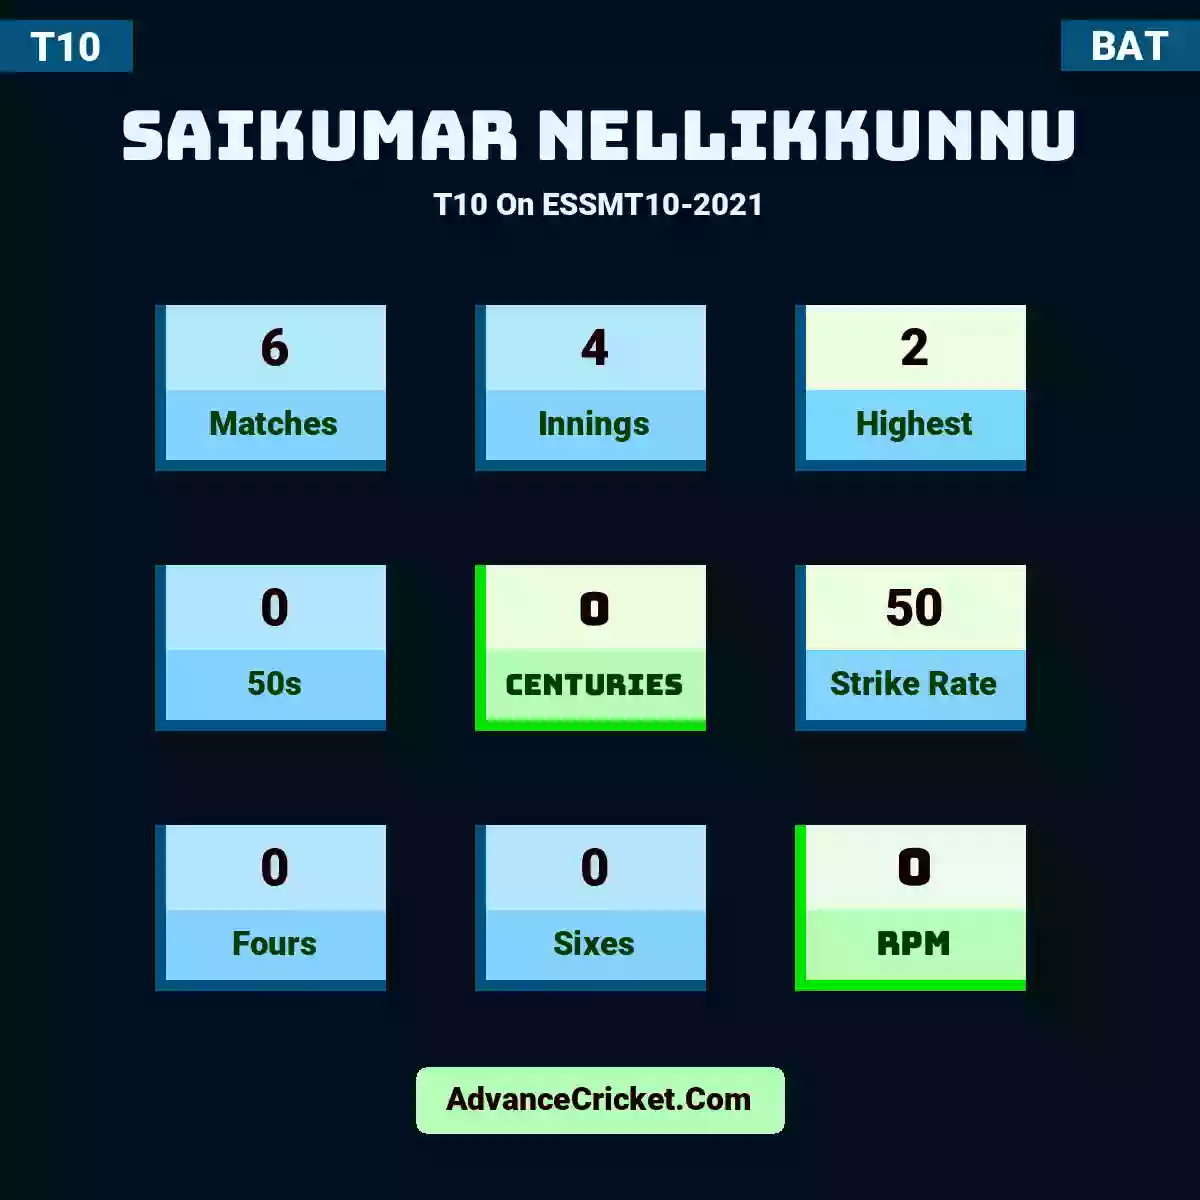 Saikumar Nellikkunnu T10  On ESSMT10-2021, Saikumar Nellikkunnu played 6 matches, scored 2 runs as highest, 0 half-centuries, and 0 centuries, with a strike rate of 50. S.Nellikkunnu hit 0 fours and 0 sixes, with an RPM of 0.